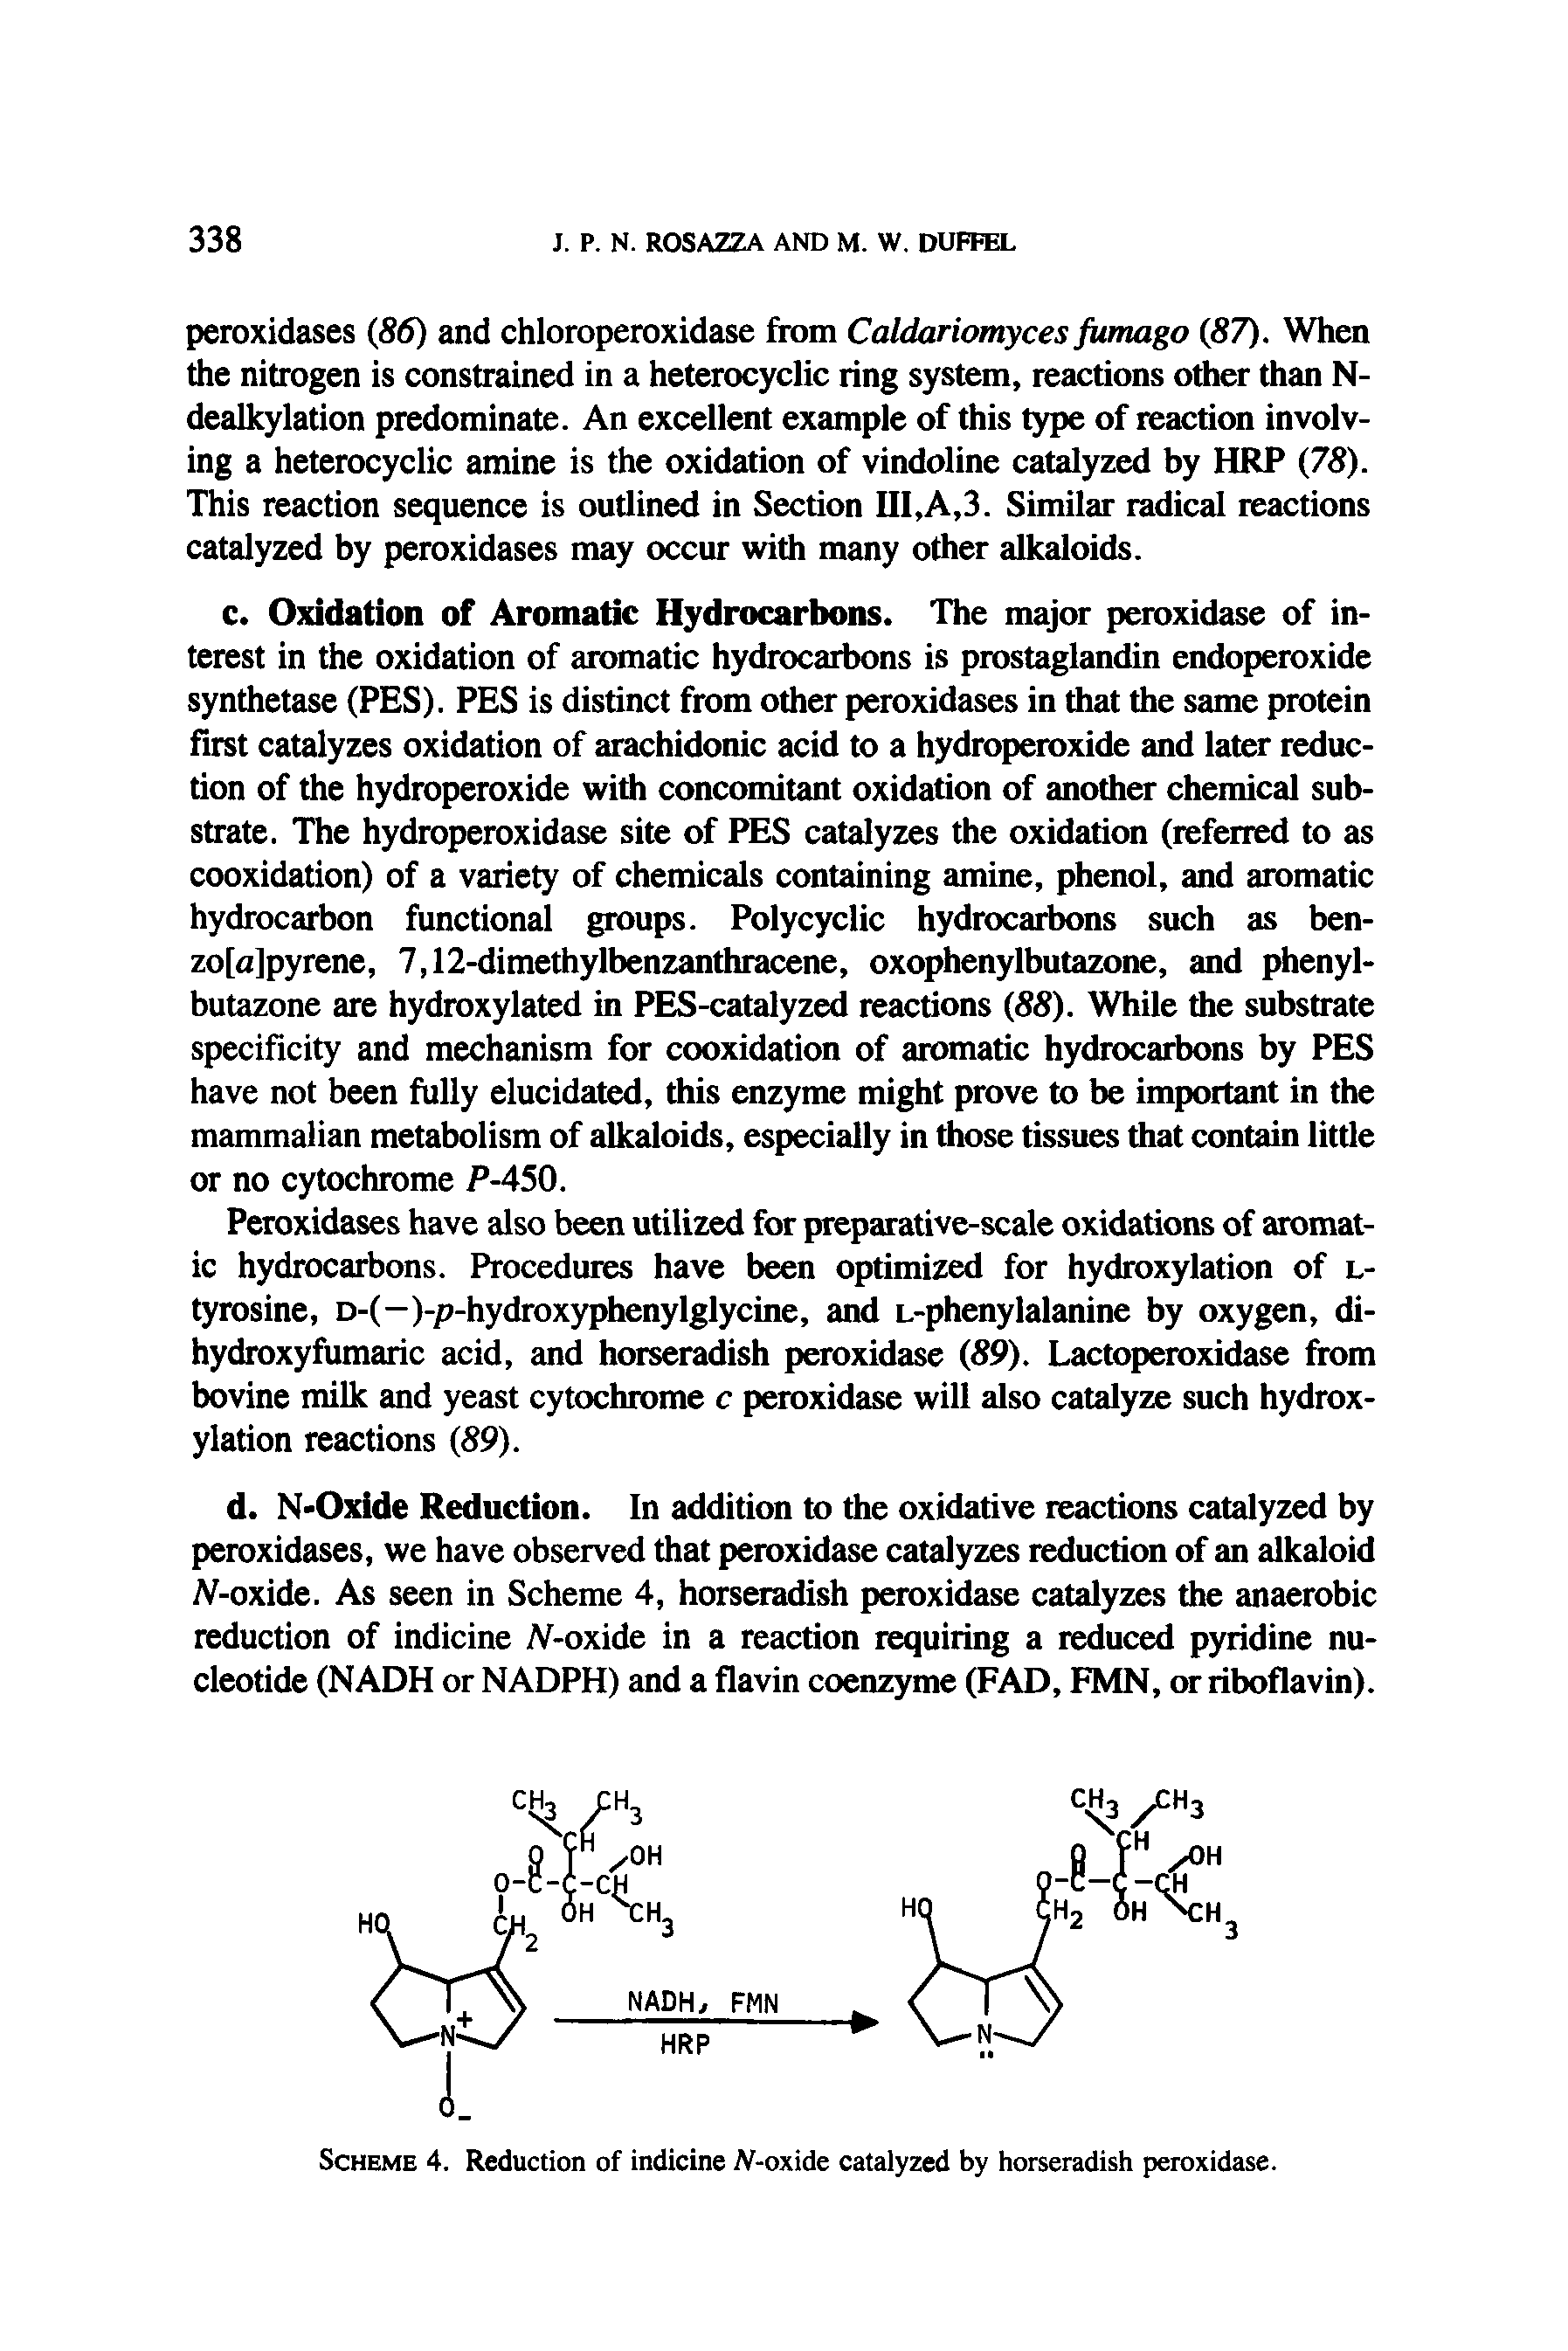 Scheme 4. Reduction of indicine lV-oxide catalyzed by horseradish peroxidase.